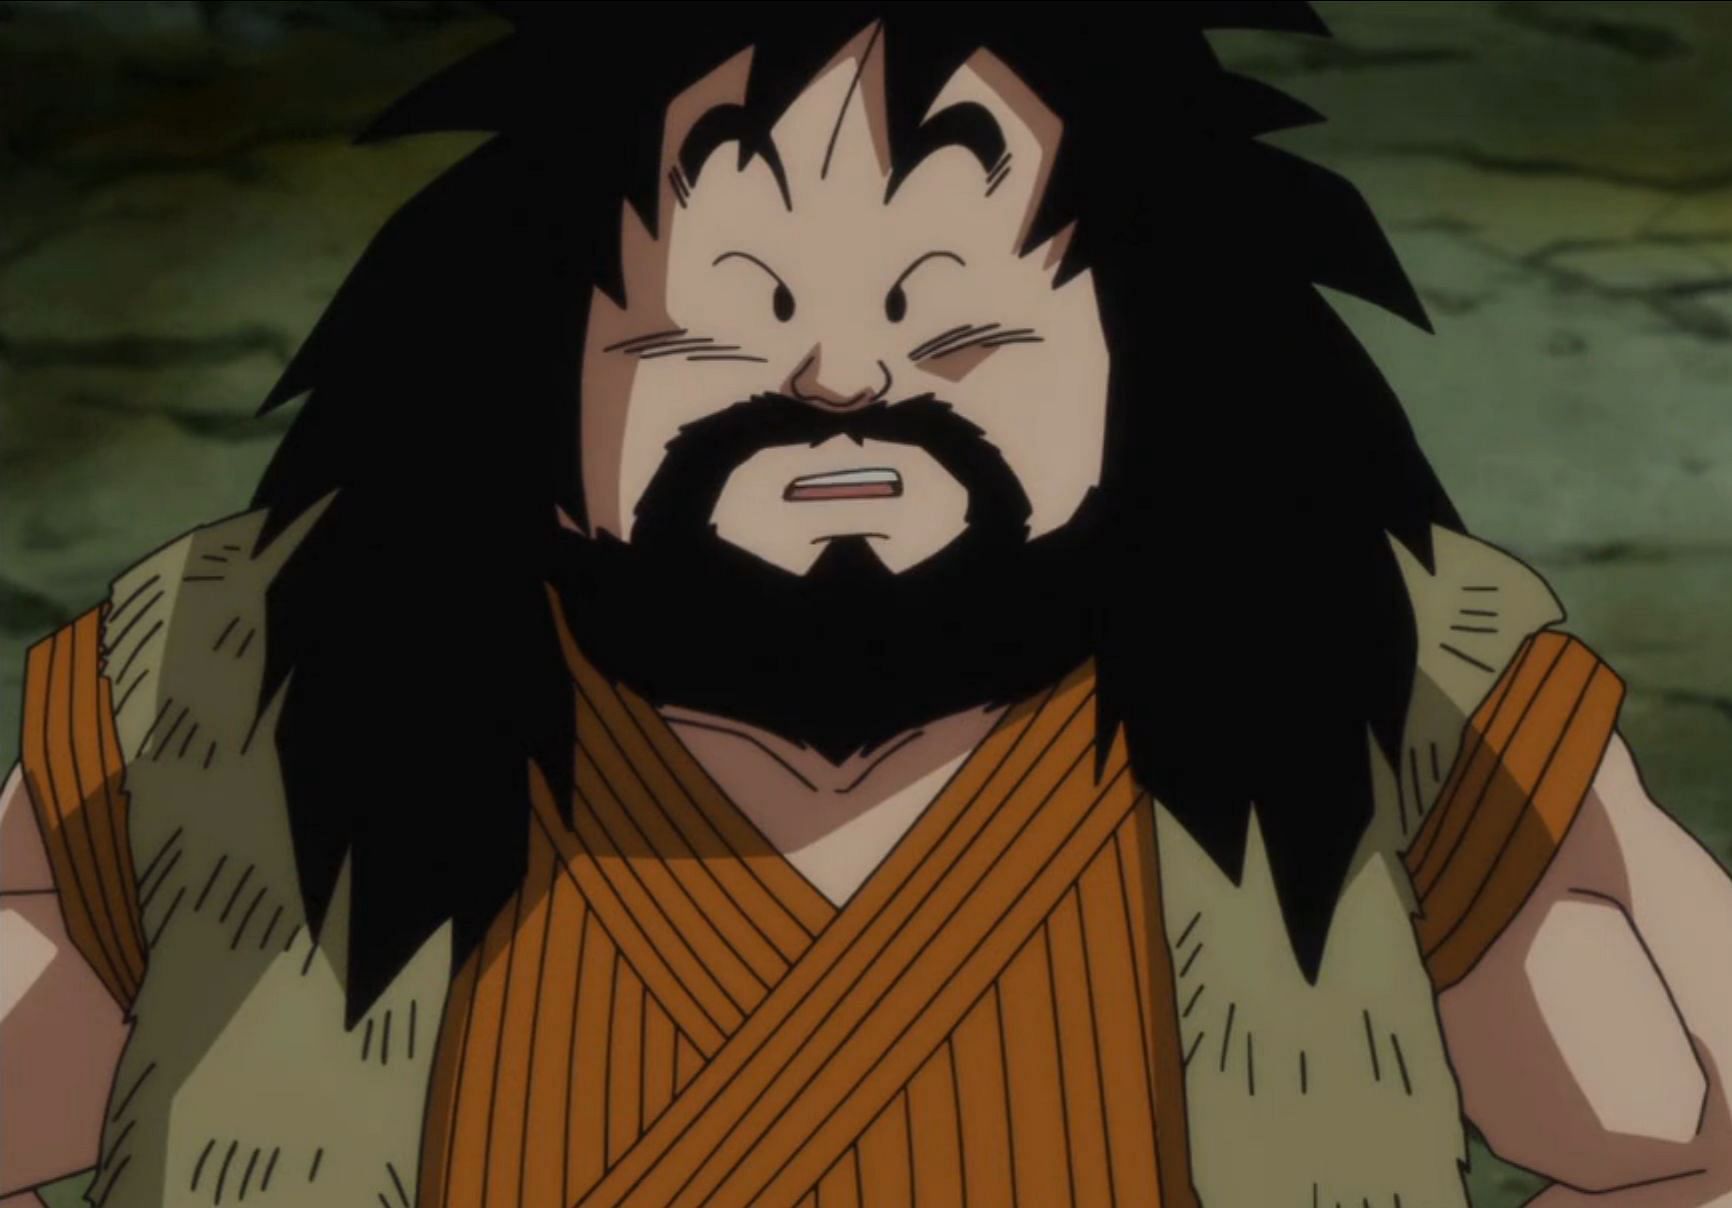 Yajirobe as he appears in the series (Image via Toei Animation)